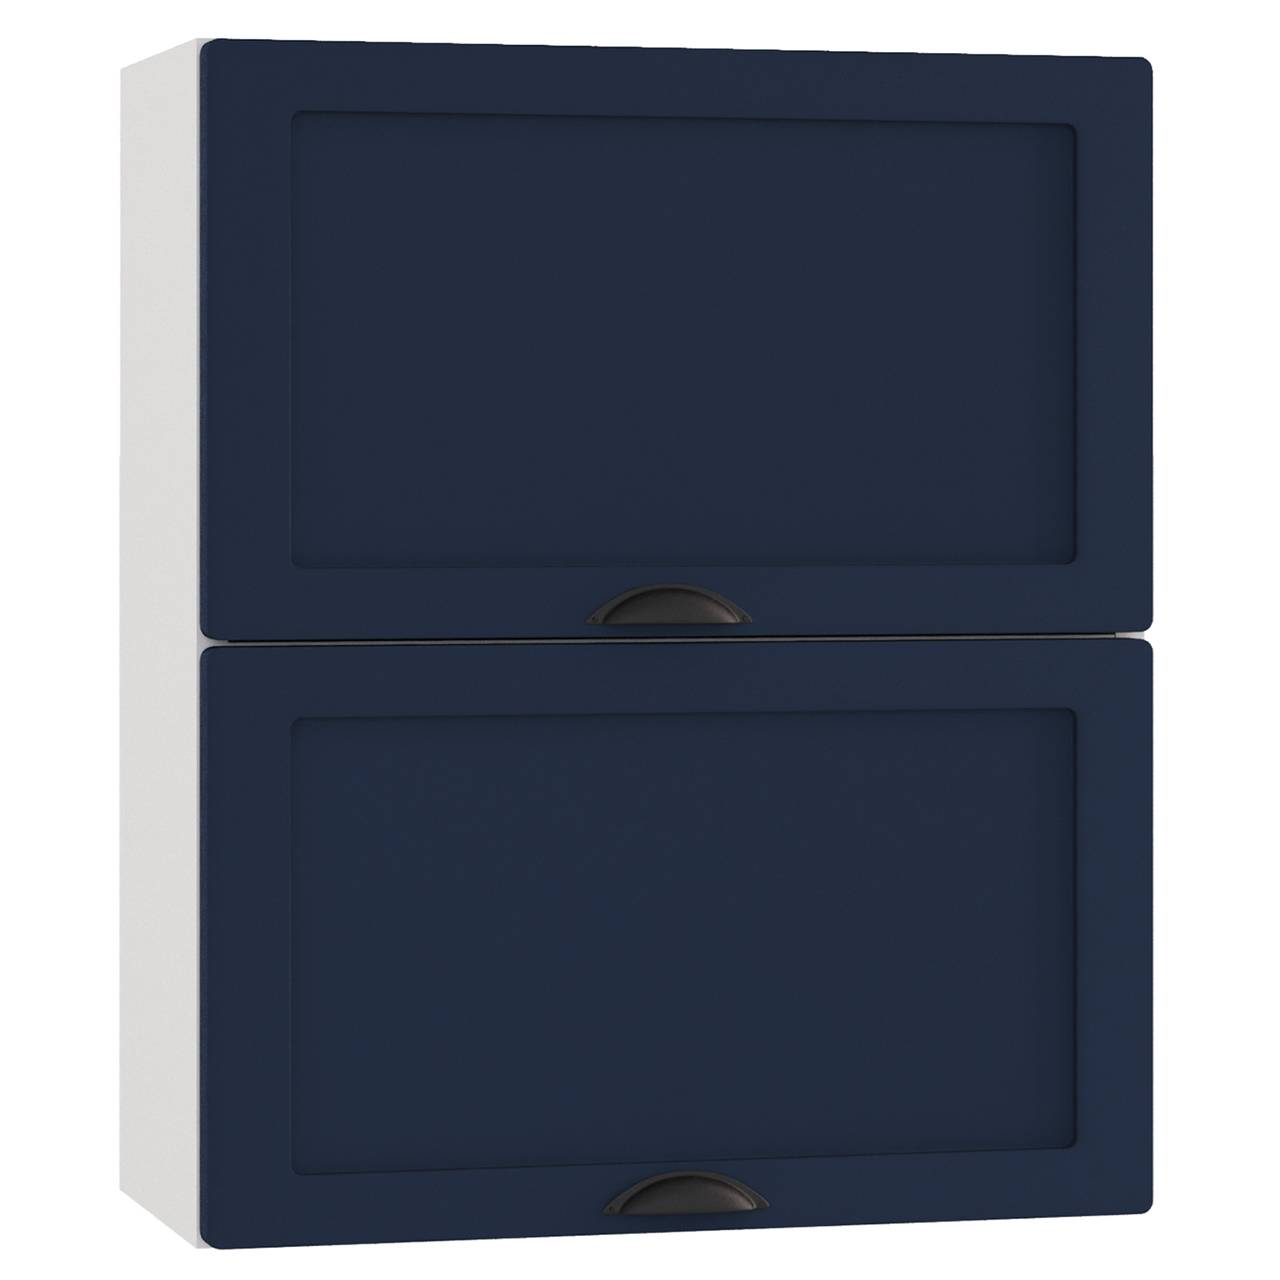 Závěsná skříňka ADELE W60 GRF/2 námořnická modrá